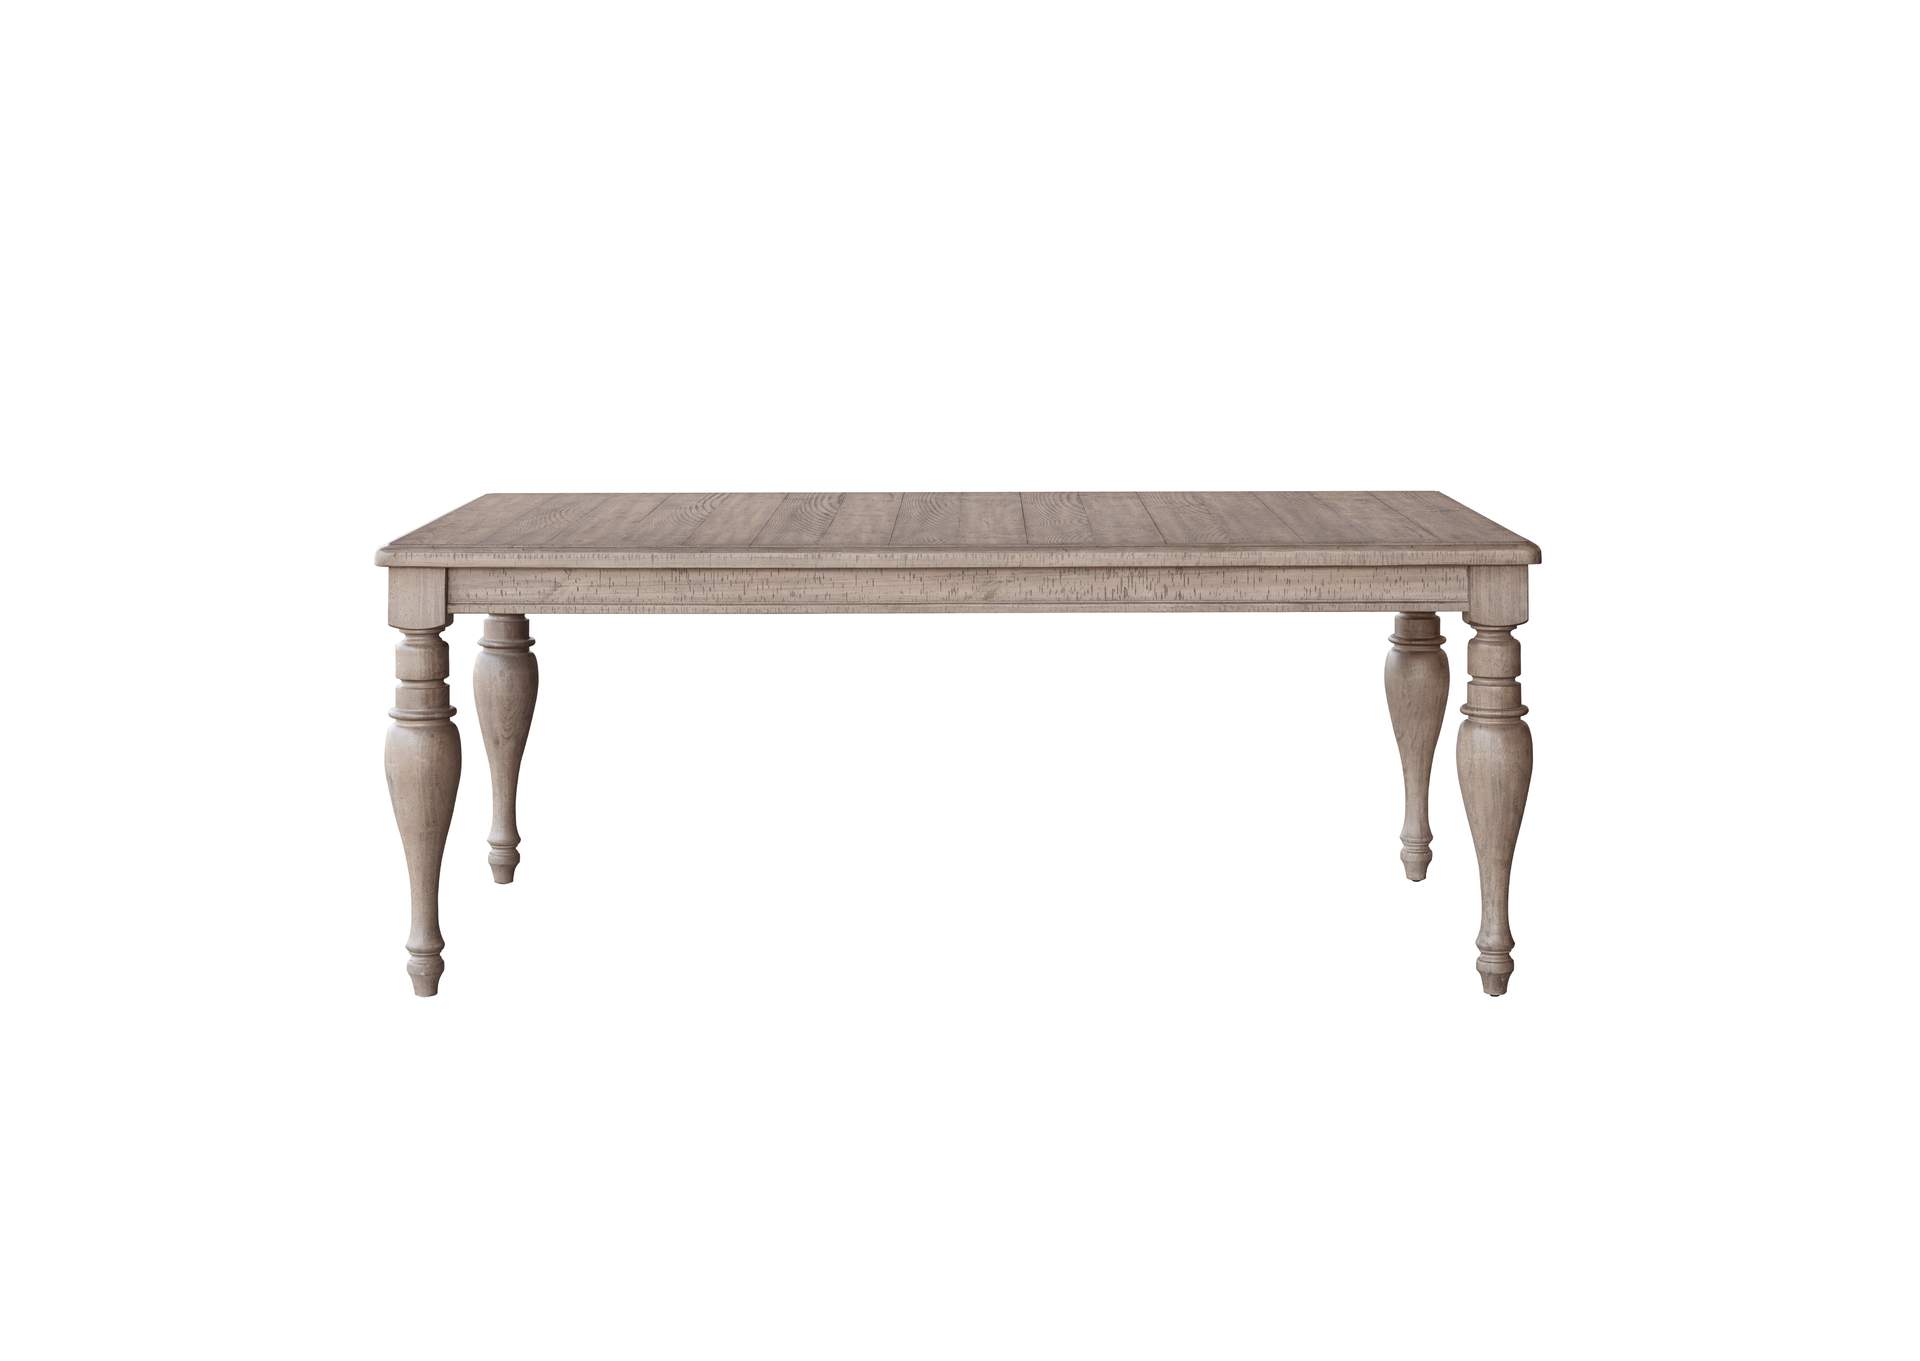 Danbury Leg Table,Pulaski Furniture